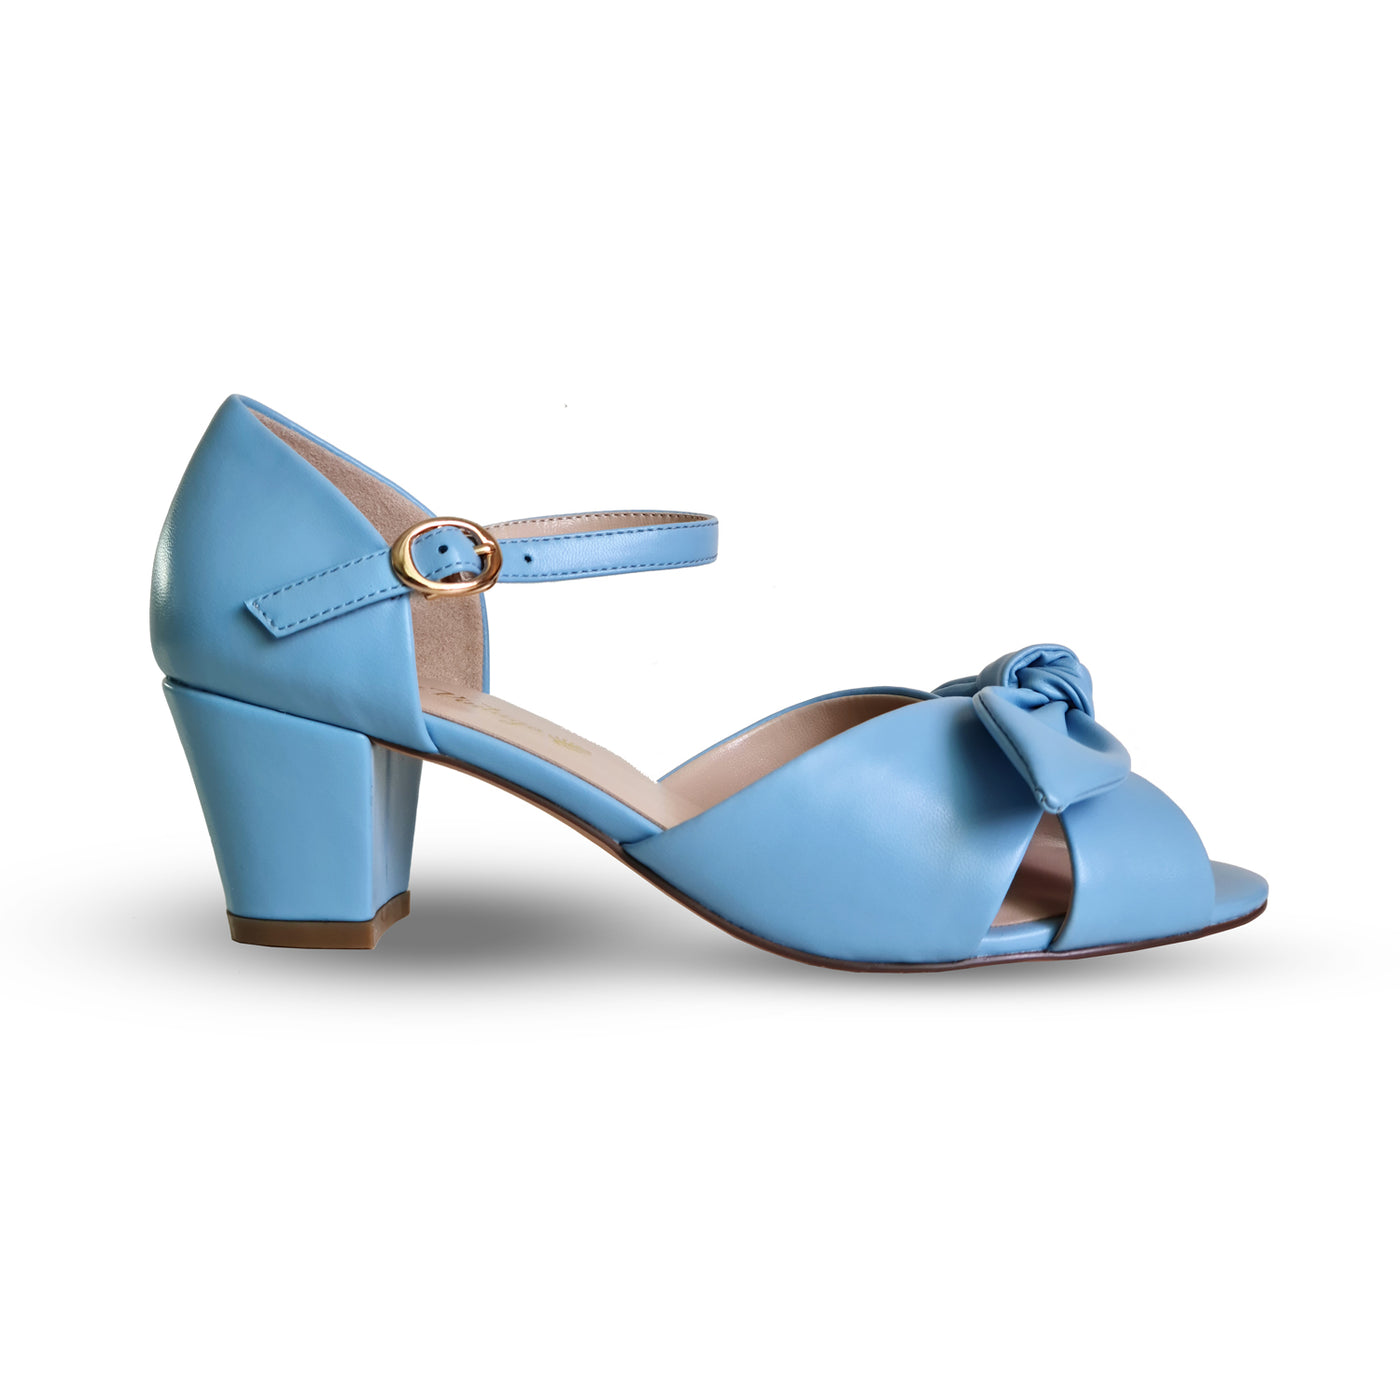 Charlie Stone Honiara Vintage Vintage heels retro pumps 1950s 1940s style open toe blue ladies pinup shoes